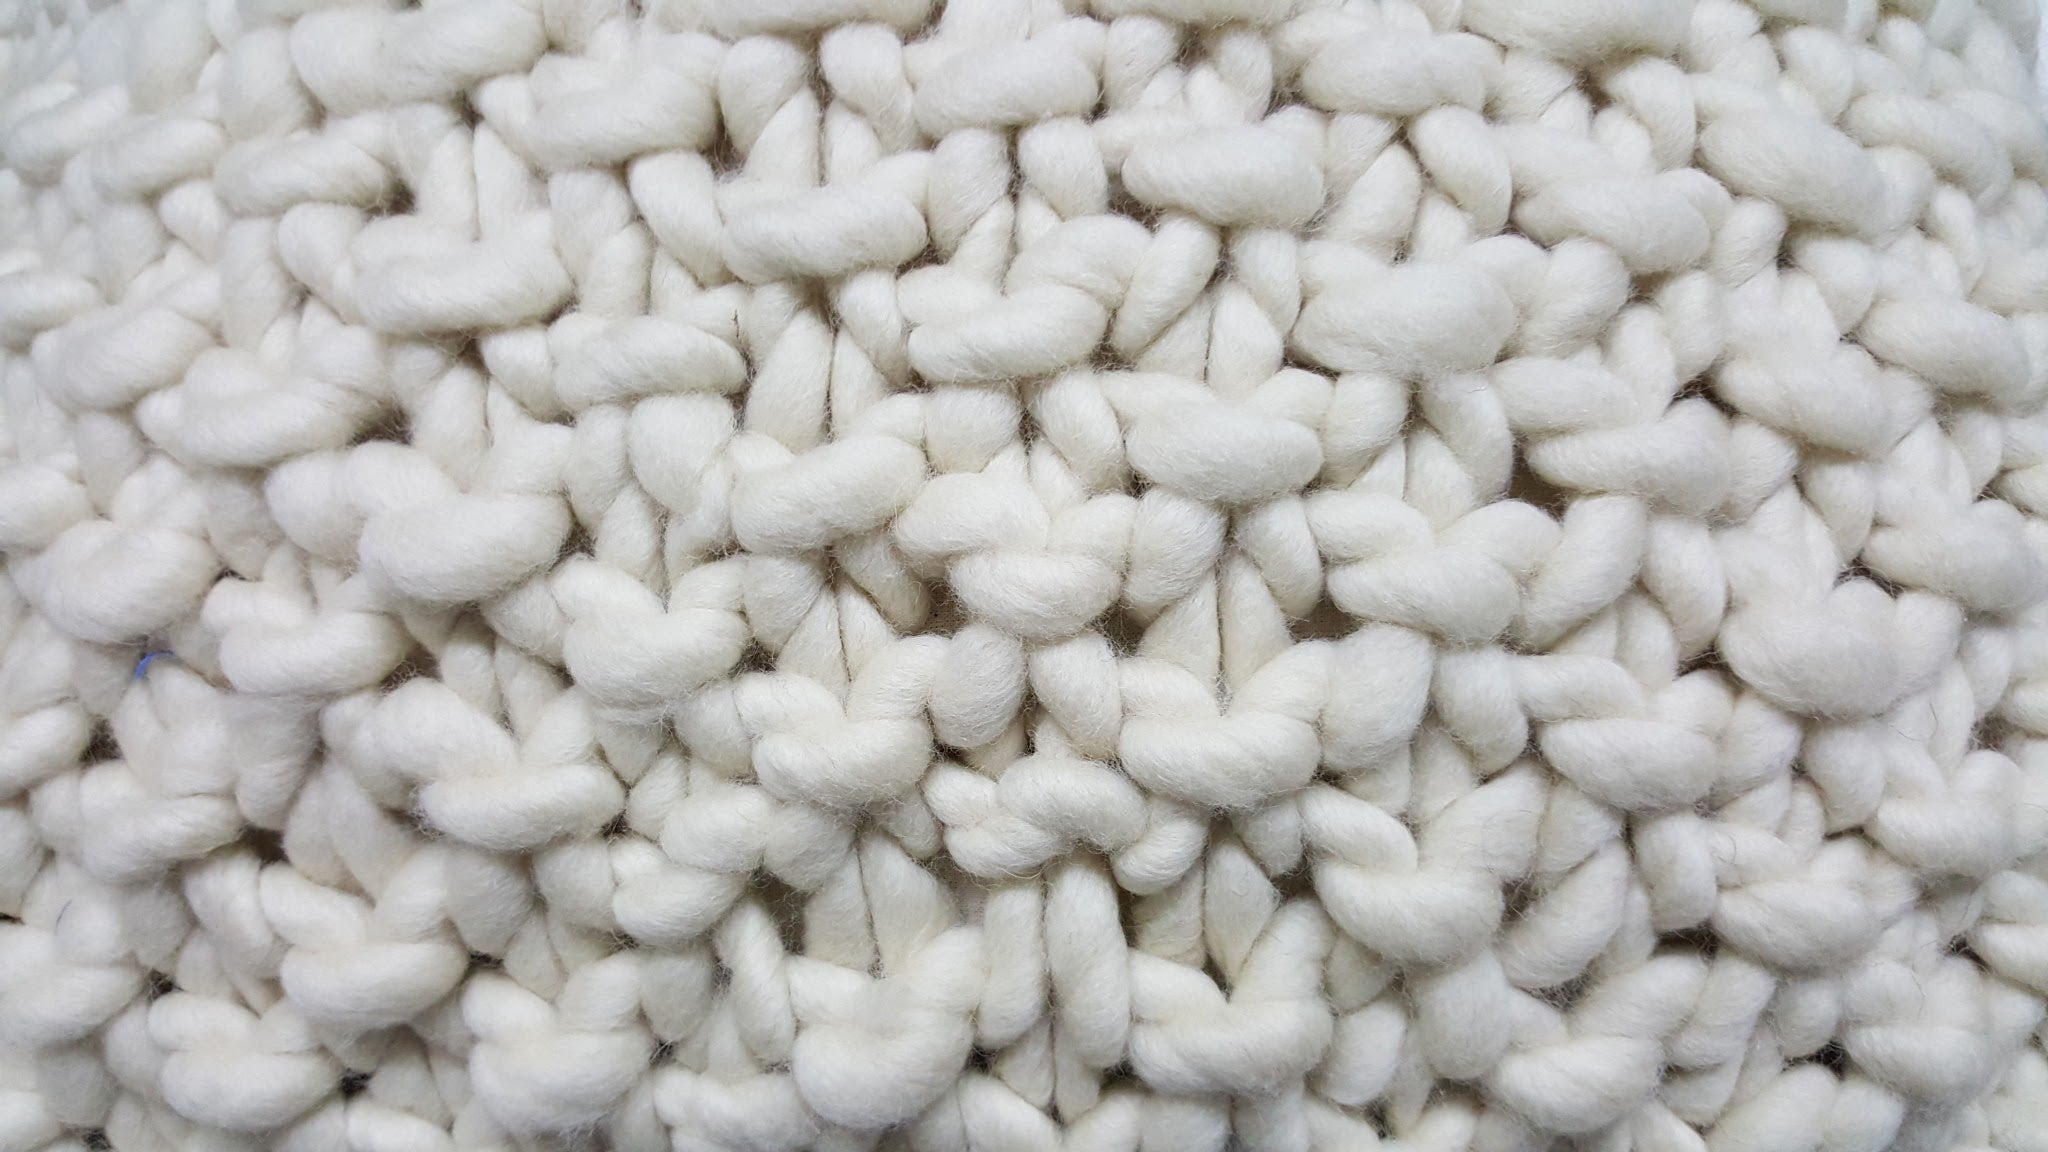 Arroz Chunky Wool Pillow